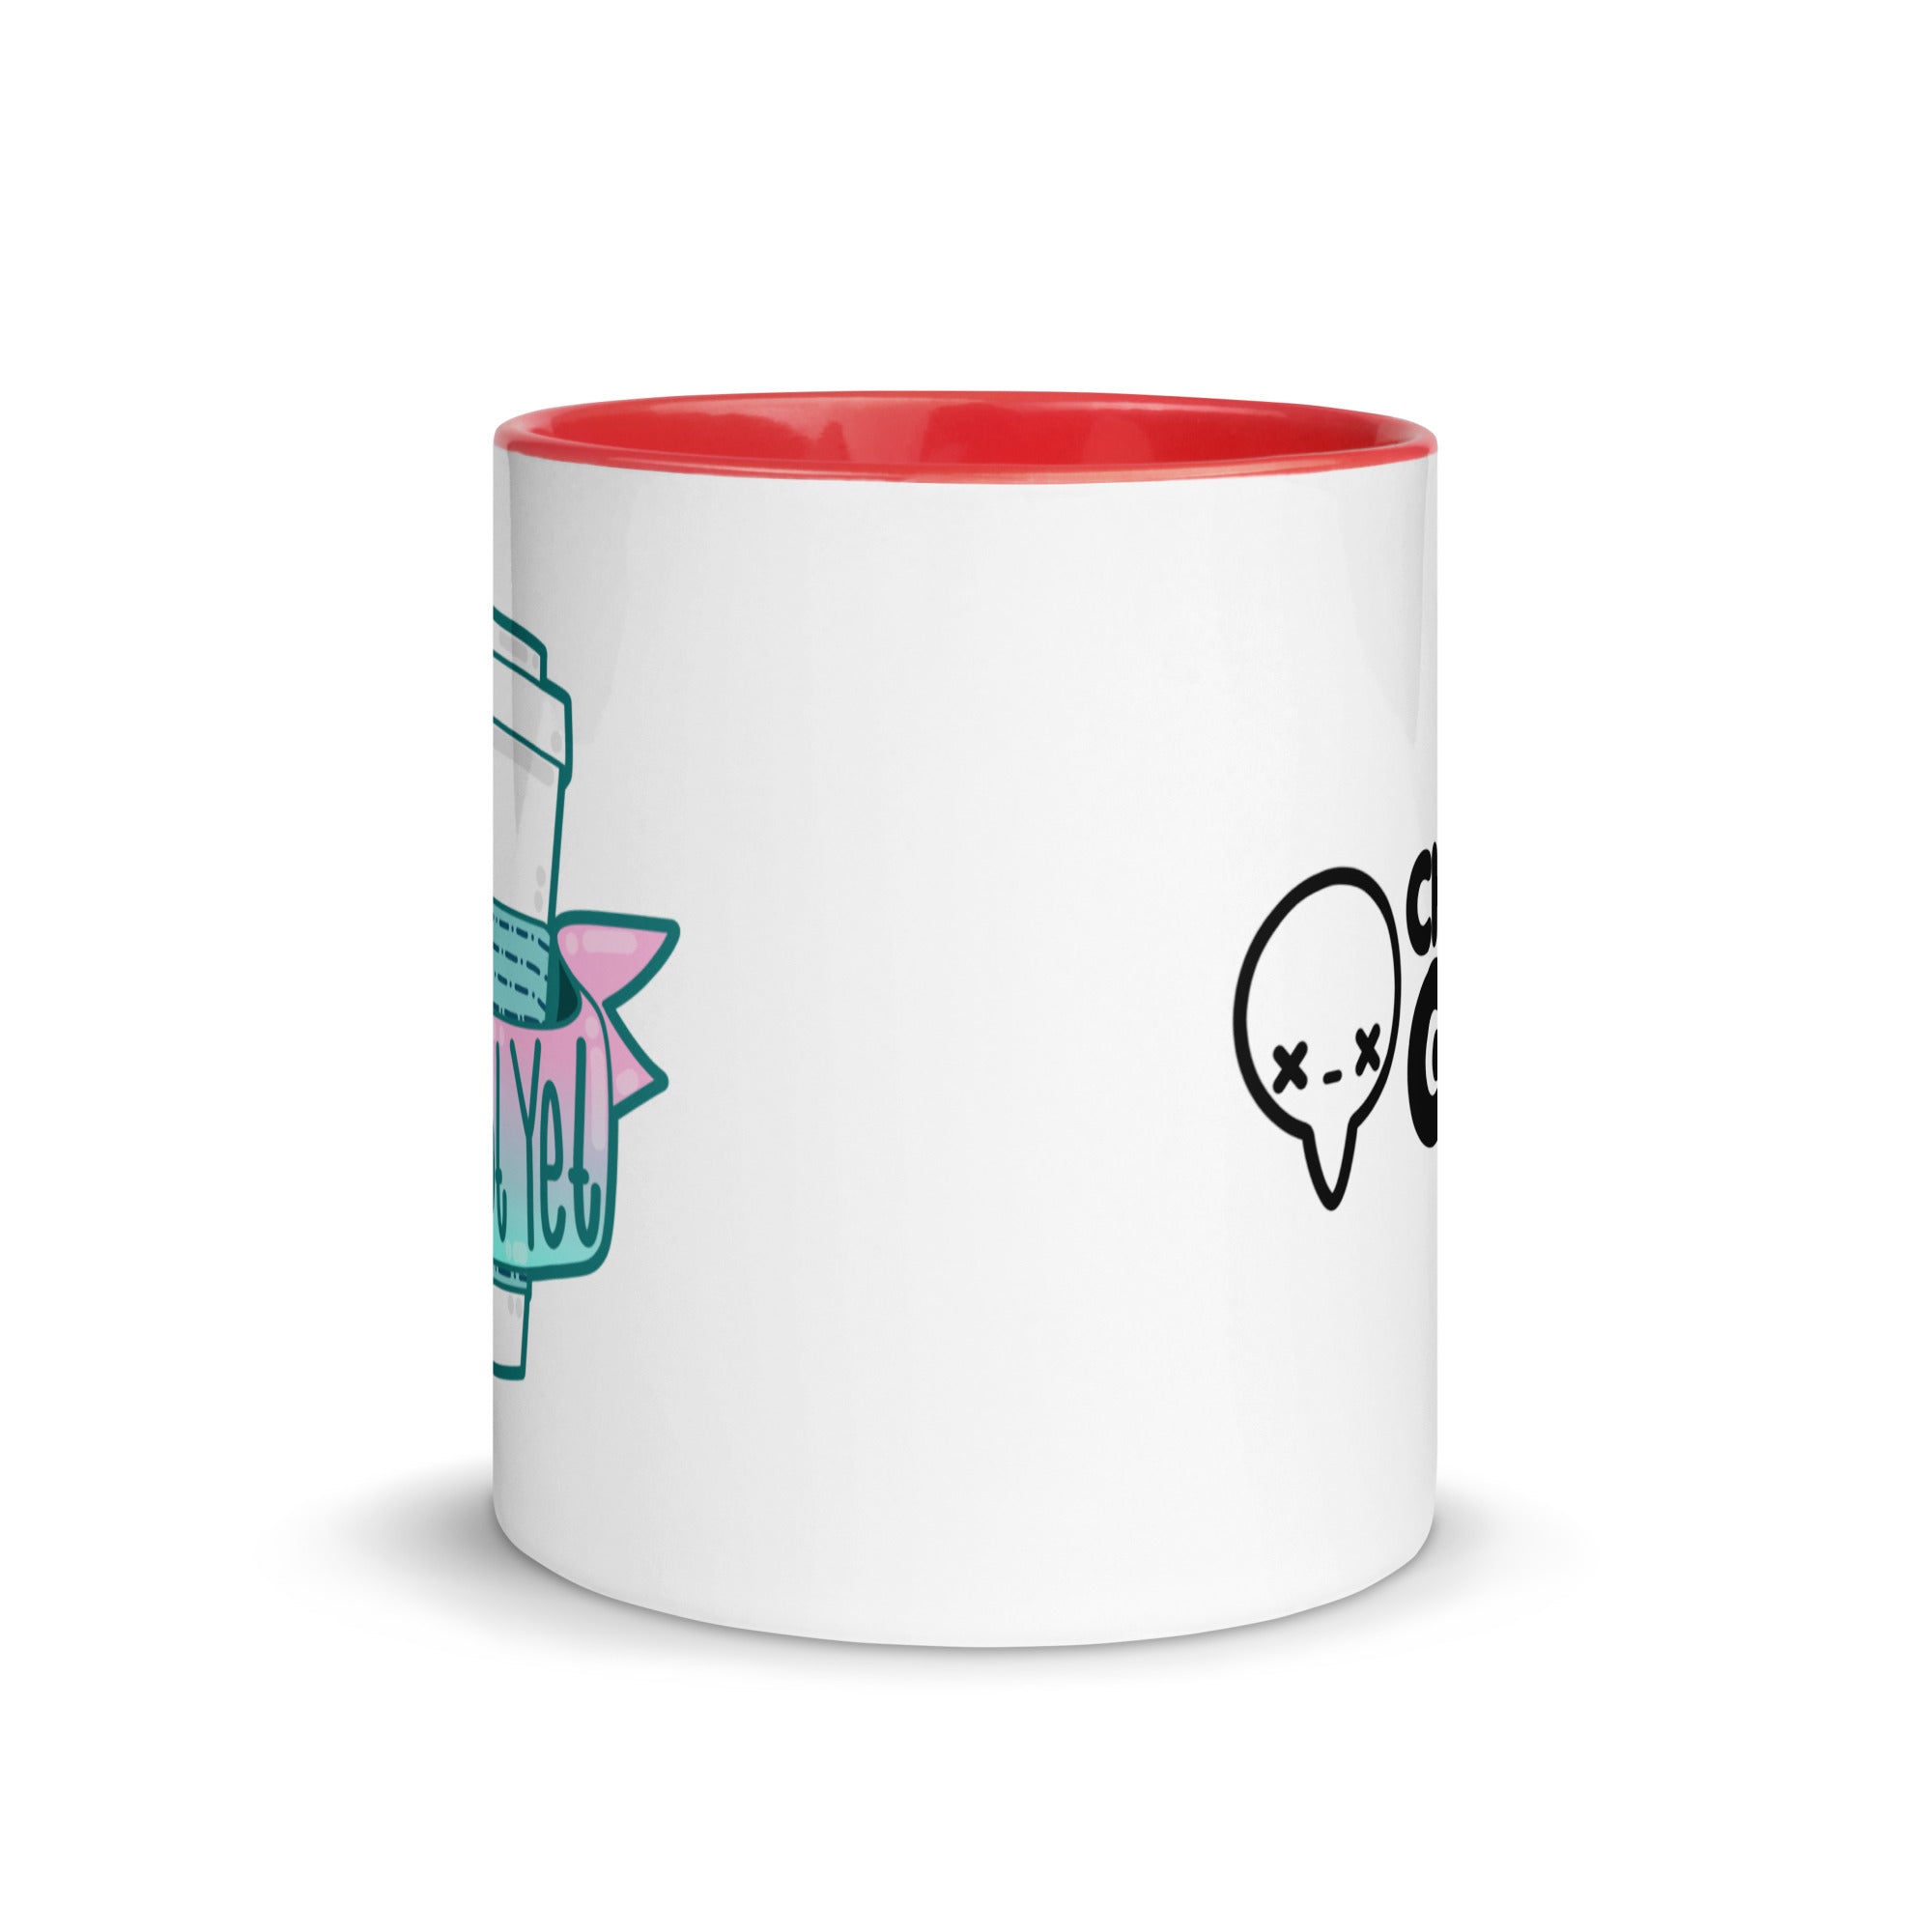 SHH NOT YET - Mug With Color Inside - ChubbleGumLLC